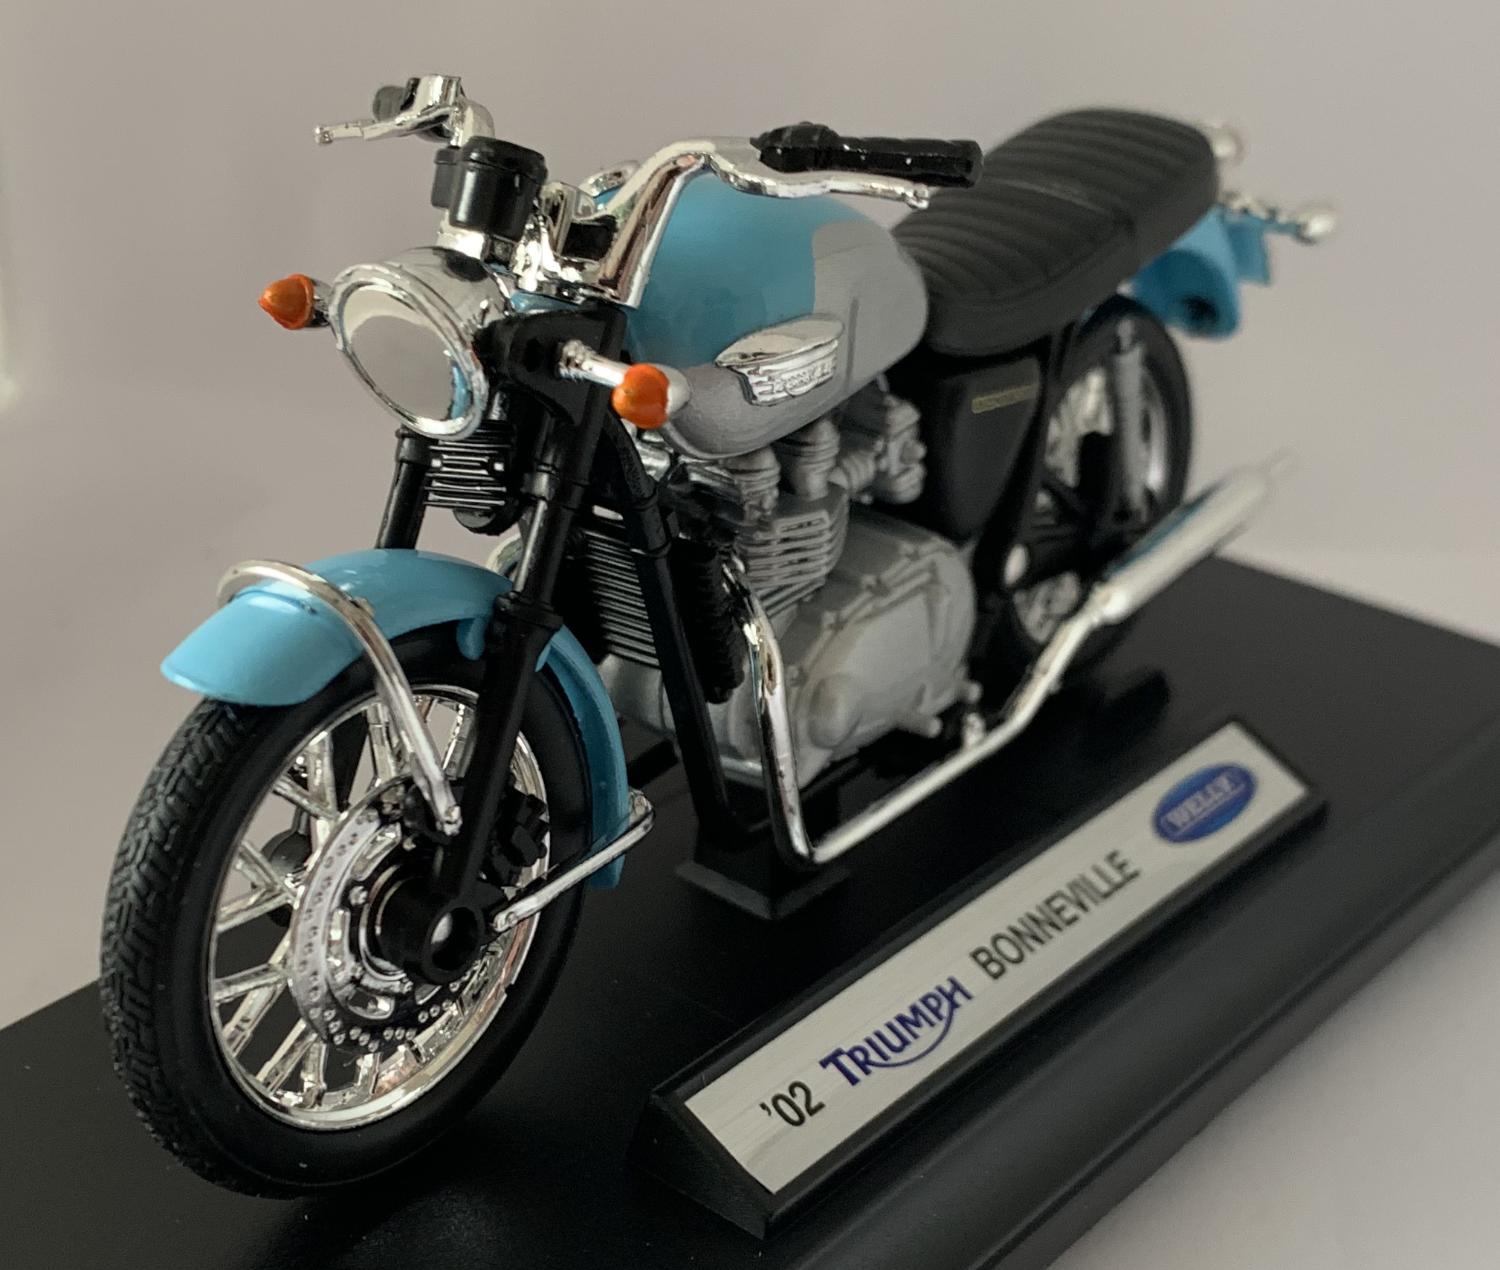 Triumph Bonneville 2002 in blue 1:18 scale motobike model from Welly, 19660